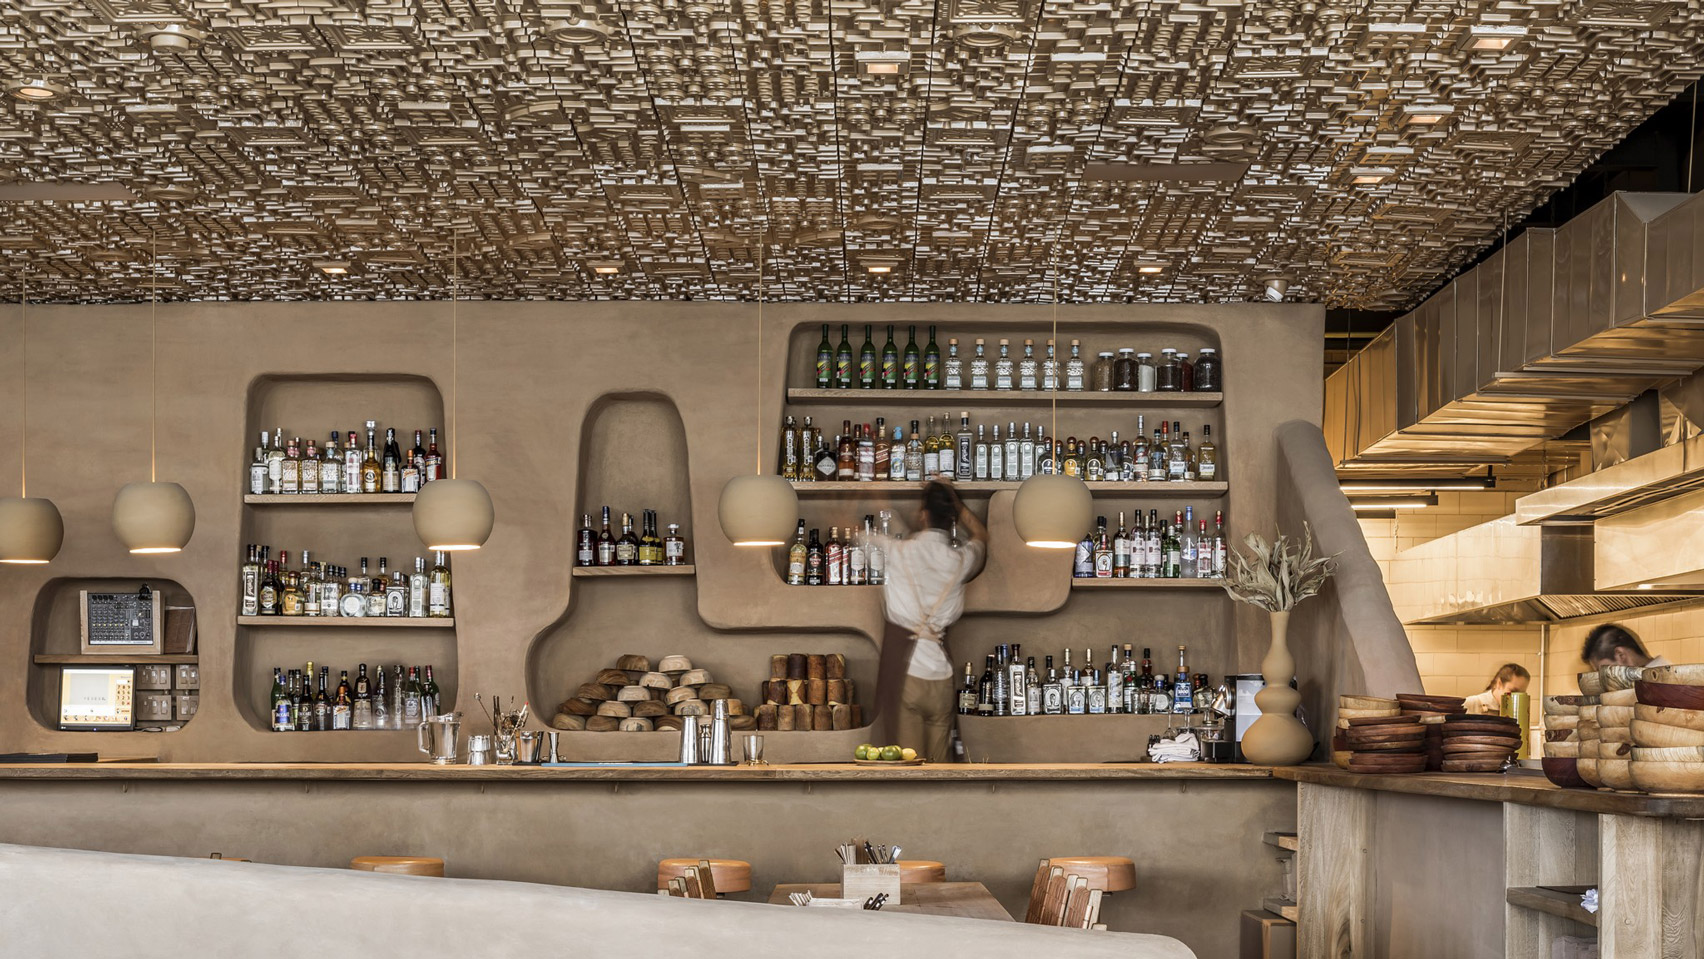 Ceiling inside Guadalajara's Veneno restaurant resembles an archeological site